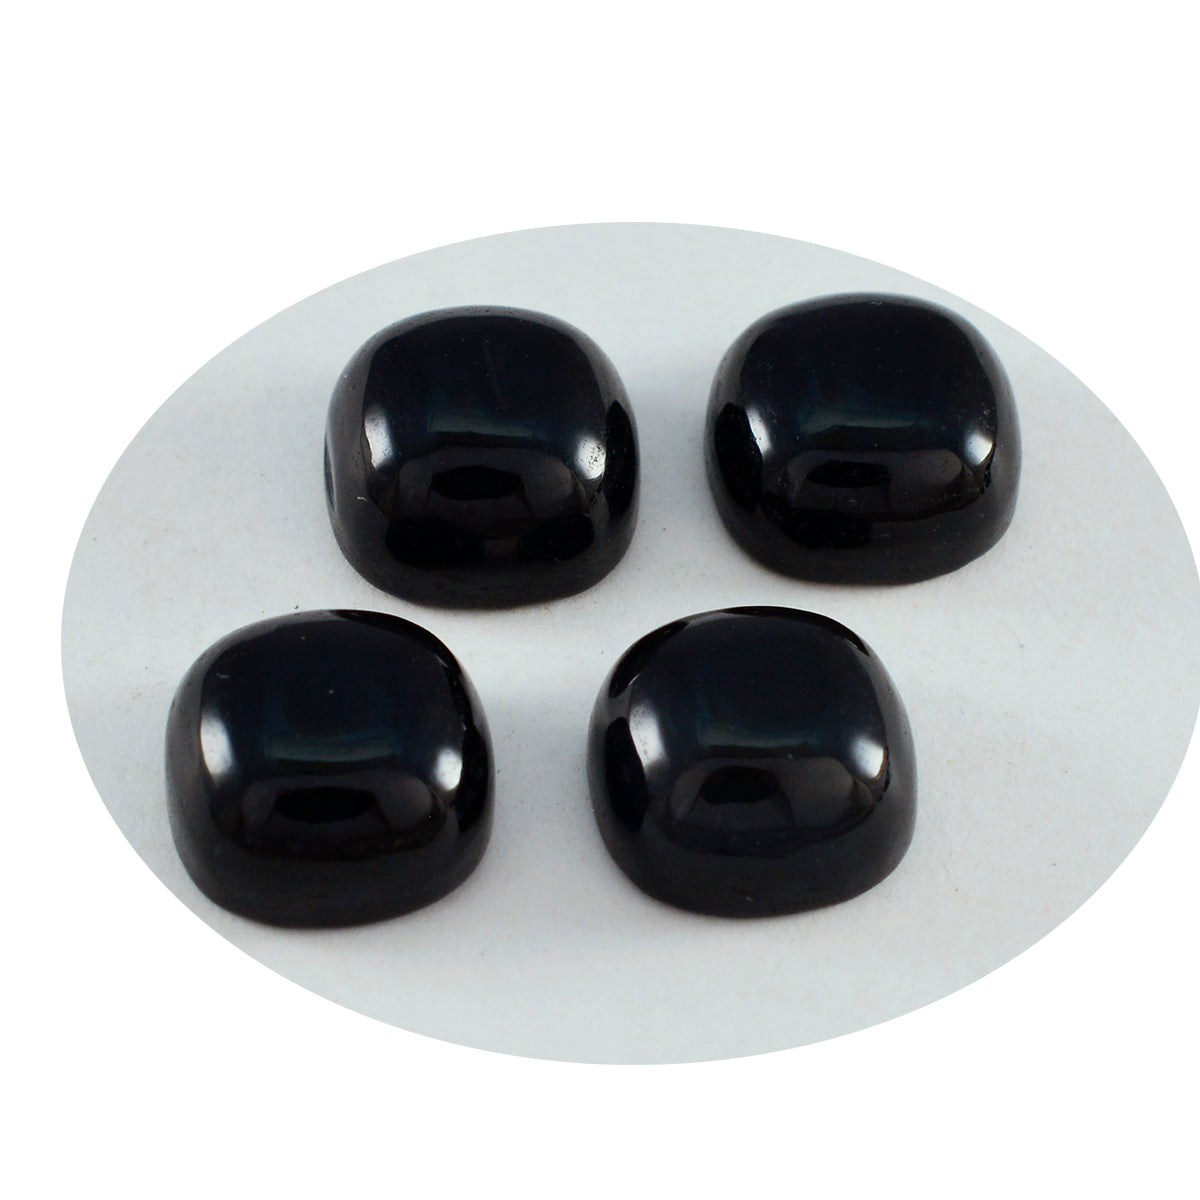 riyogems 1pc ブラック オニキス カボション 7x7 mm クッション形状の素晴らしい品質のルース宝石